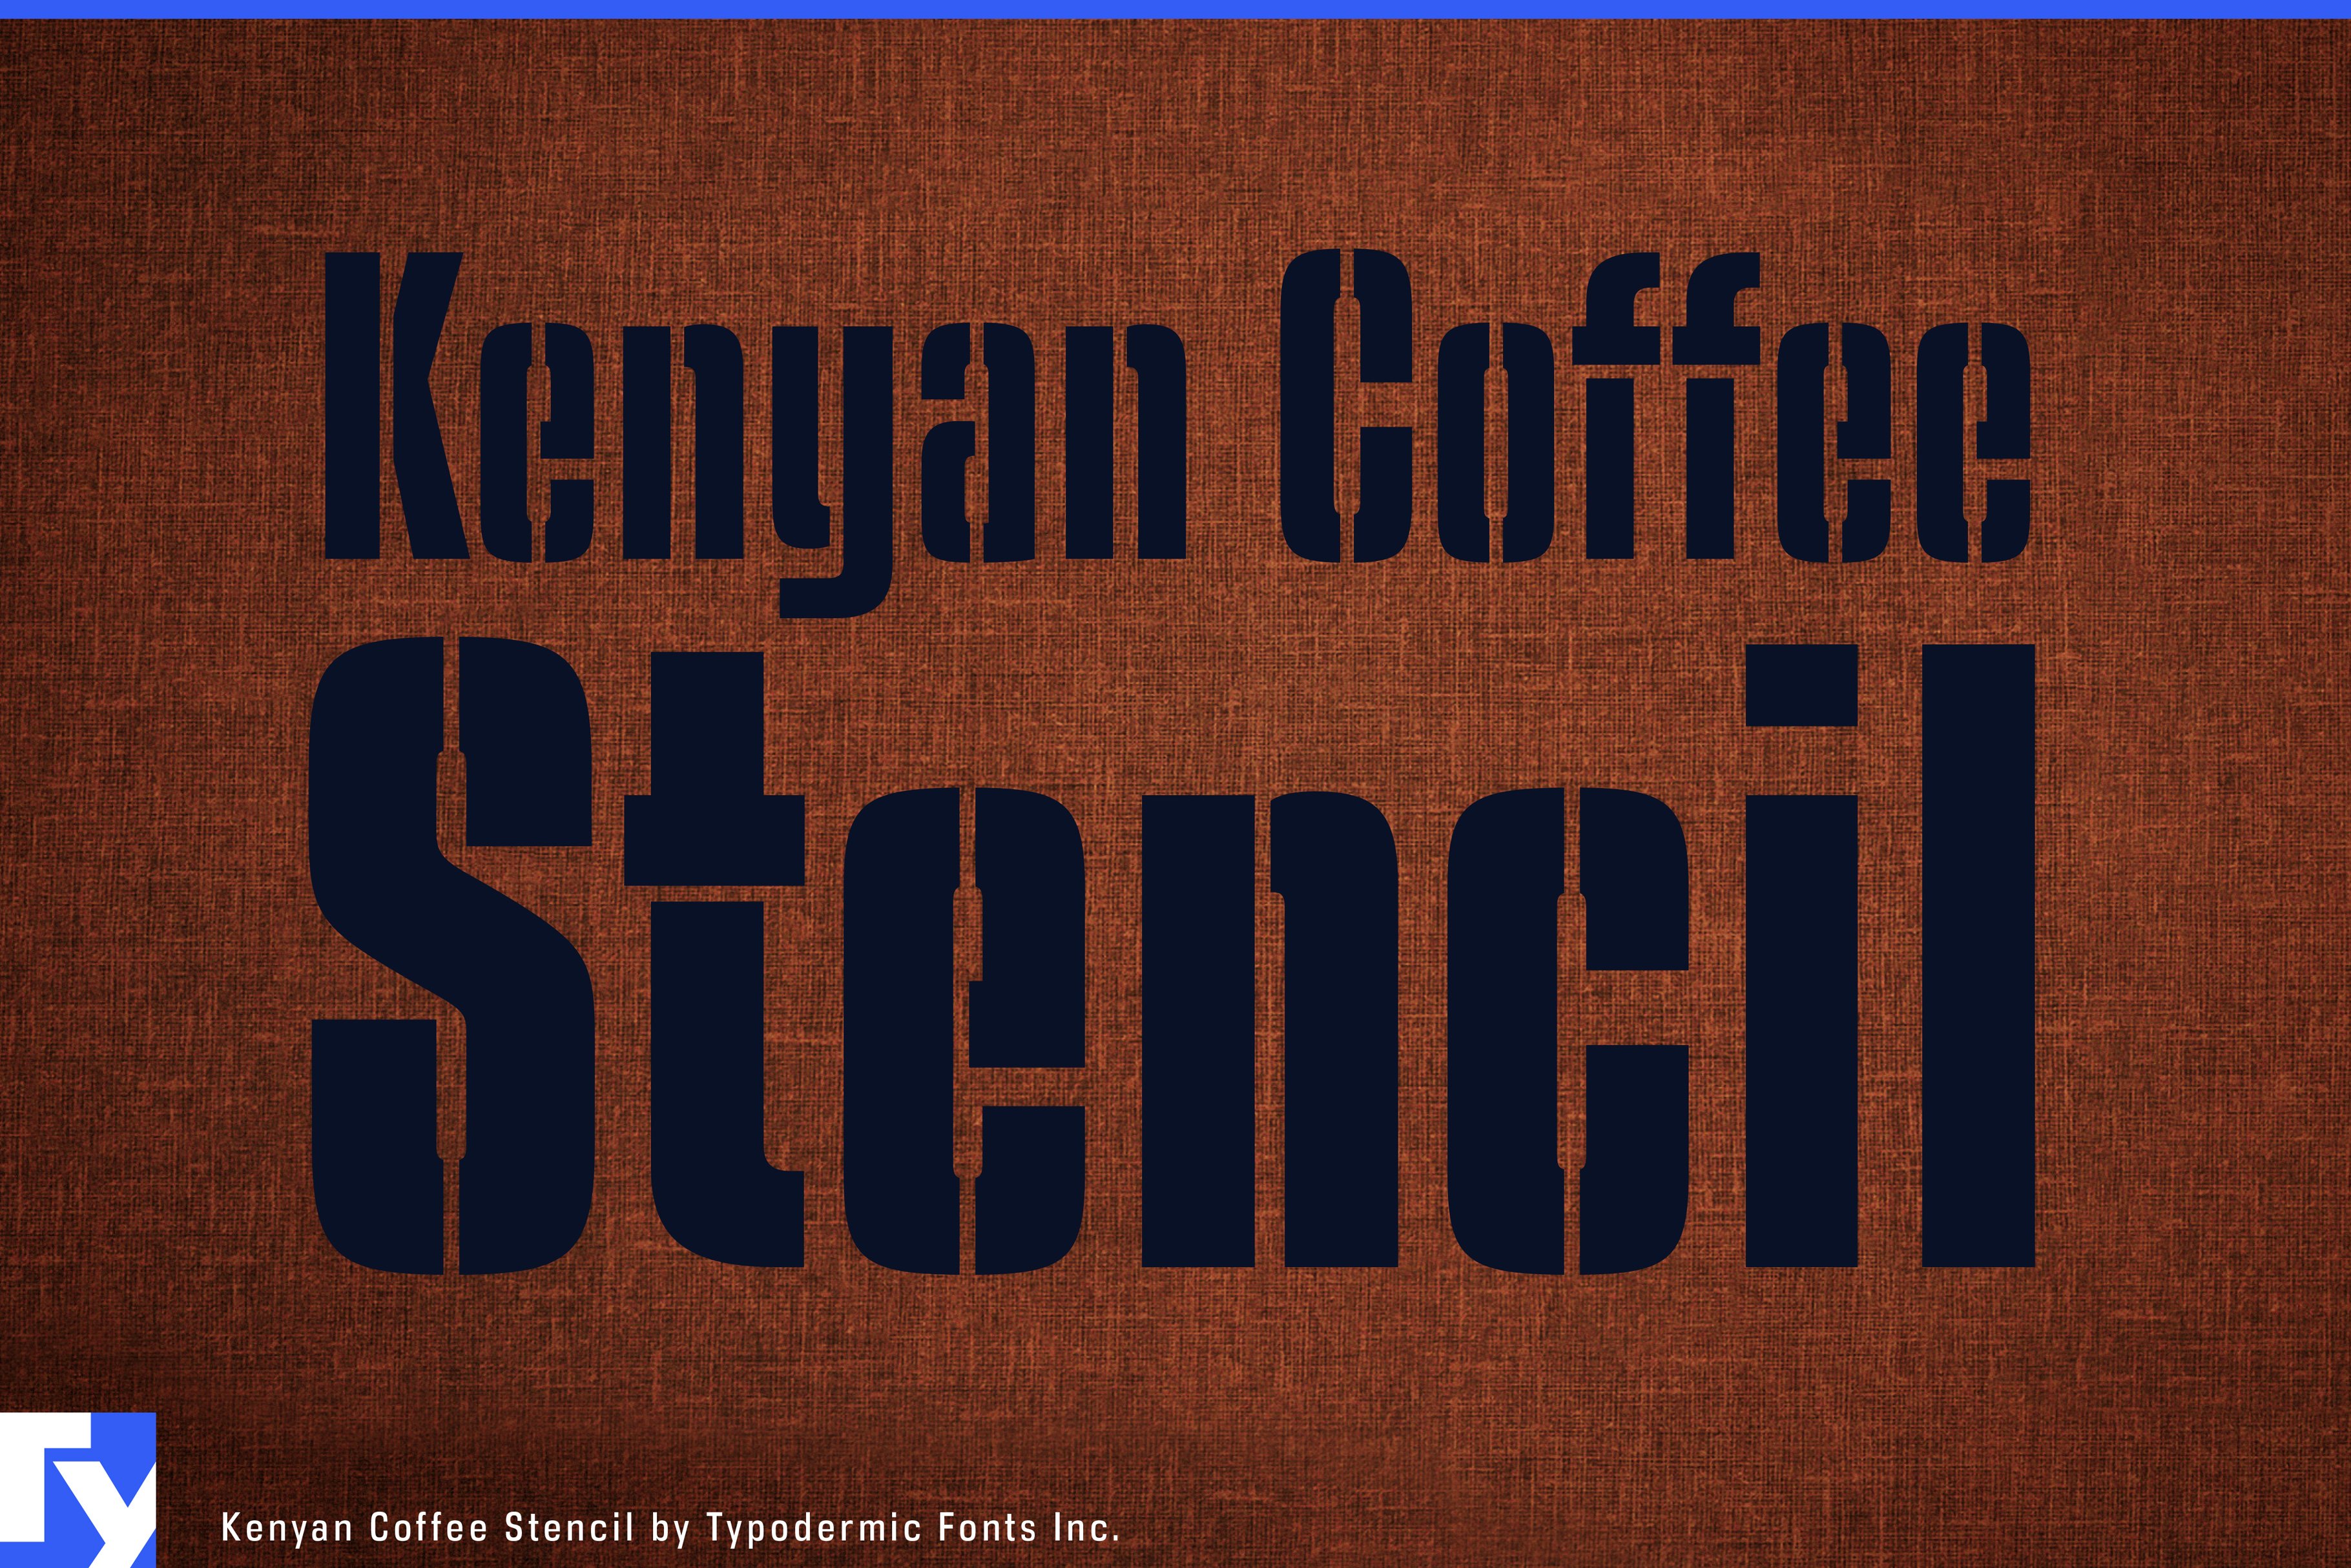 Kenyan Coffee Stencil cover image.